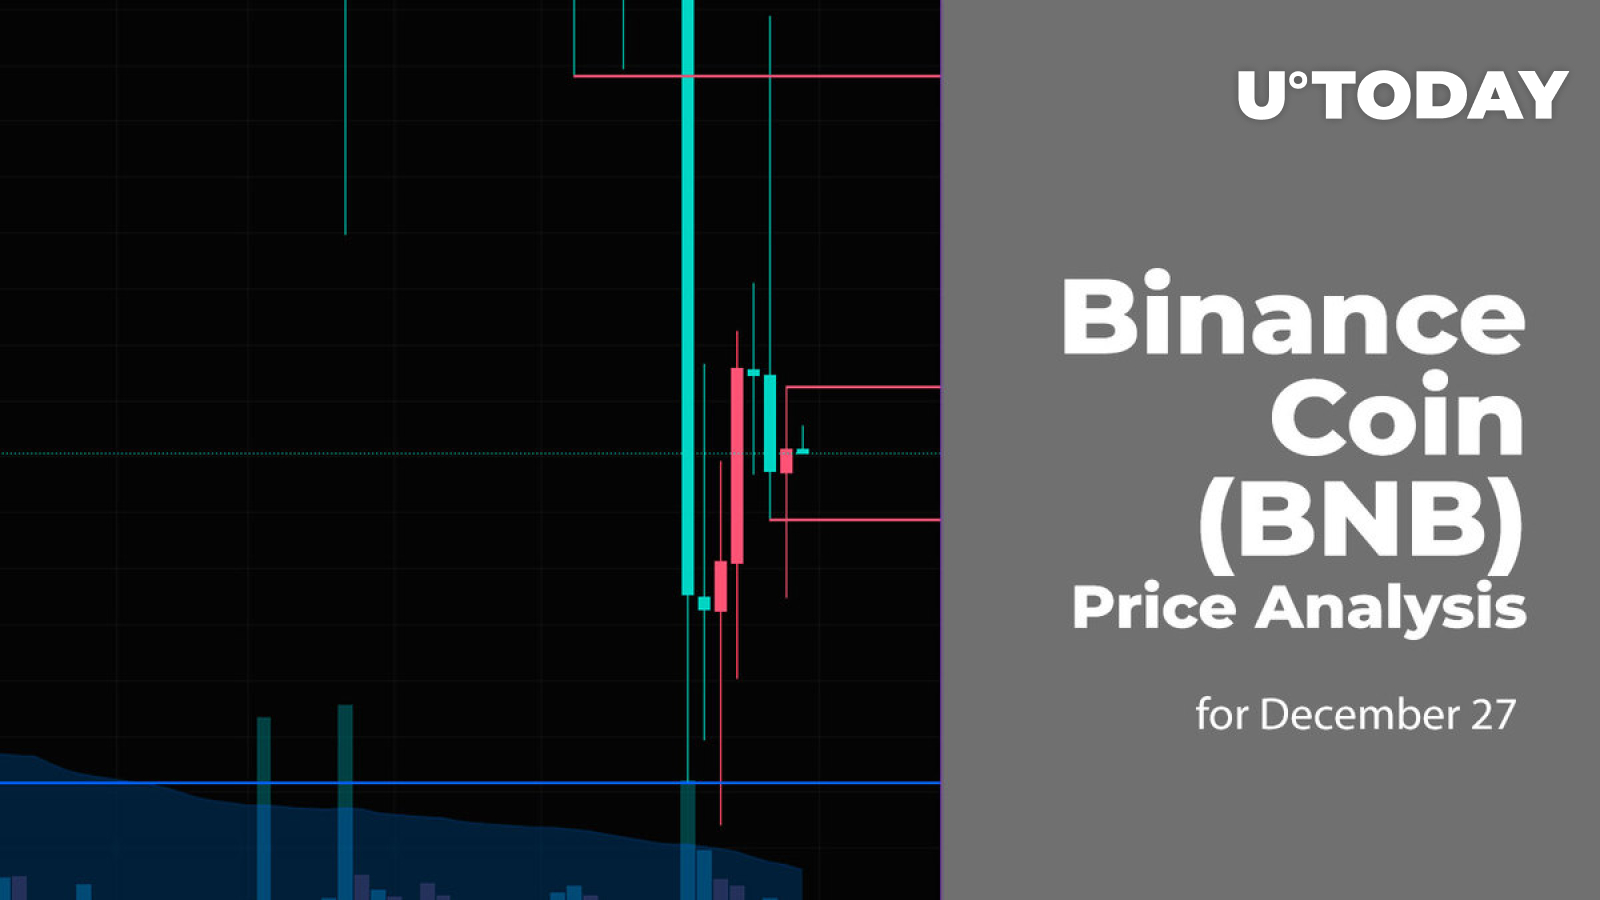 Binance Coin (BNB) Price Analysis for December 27